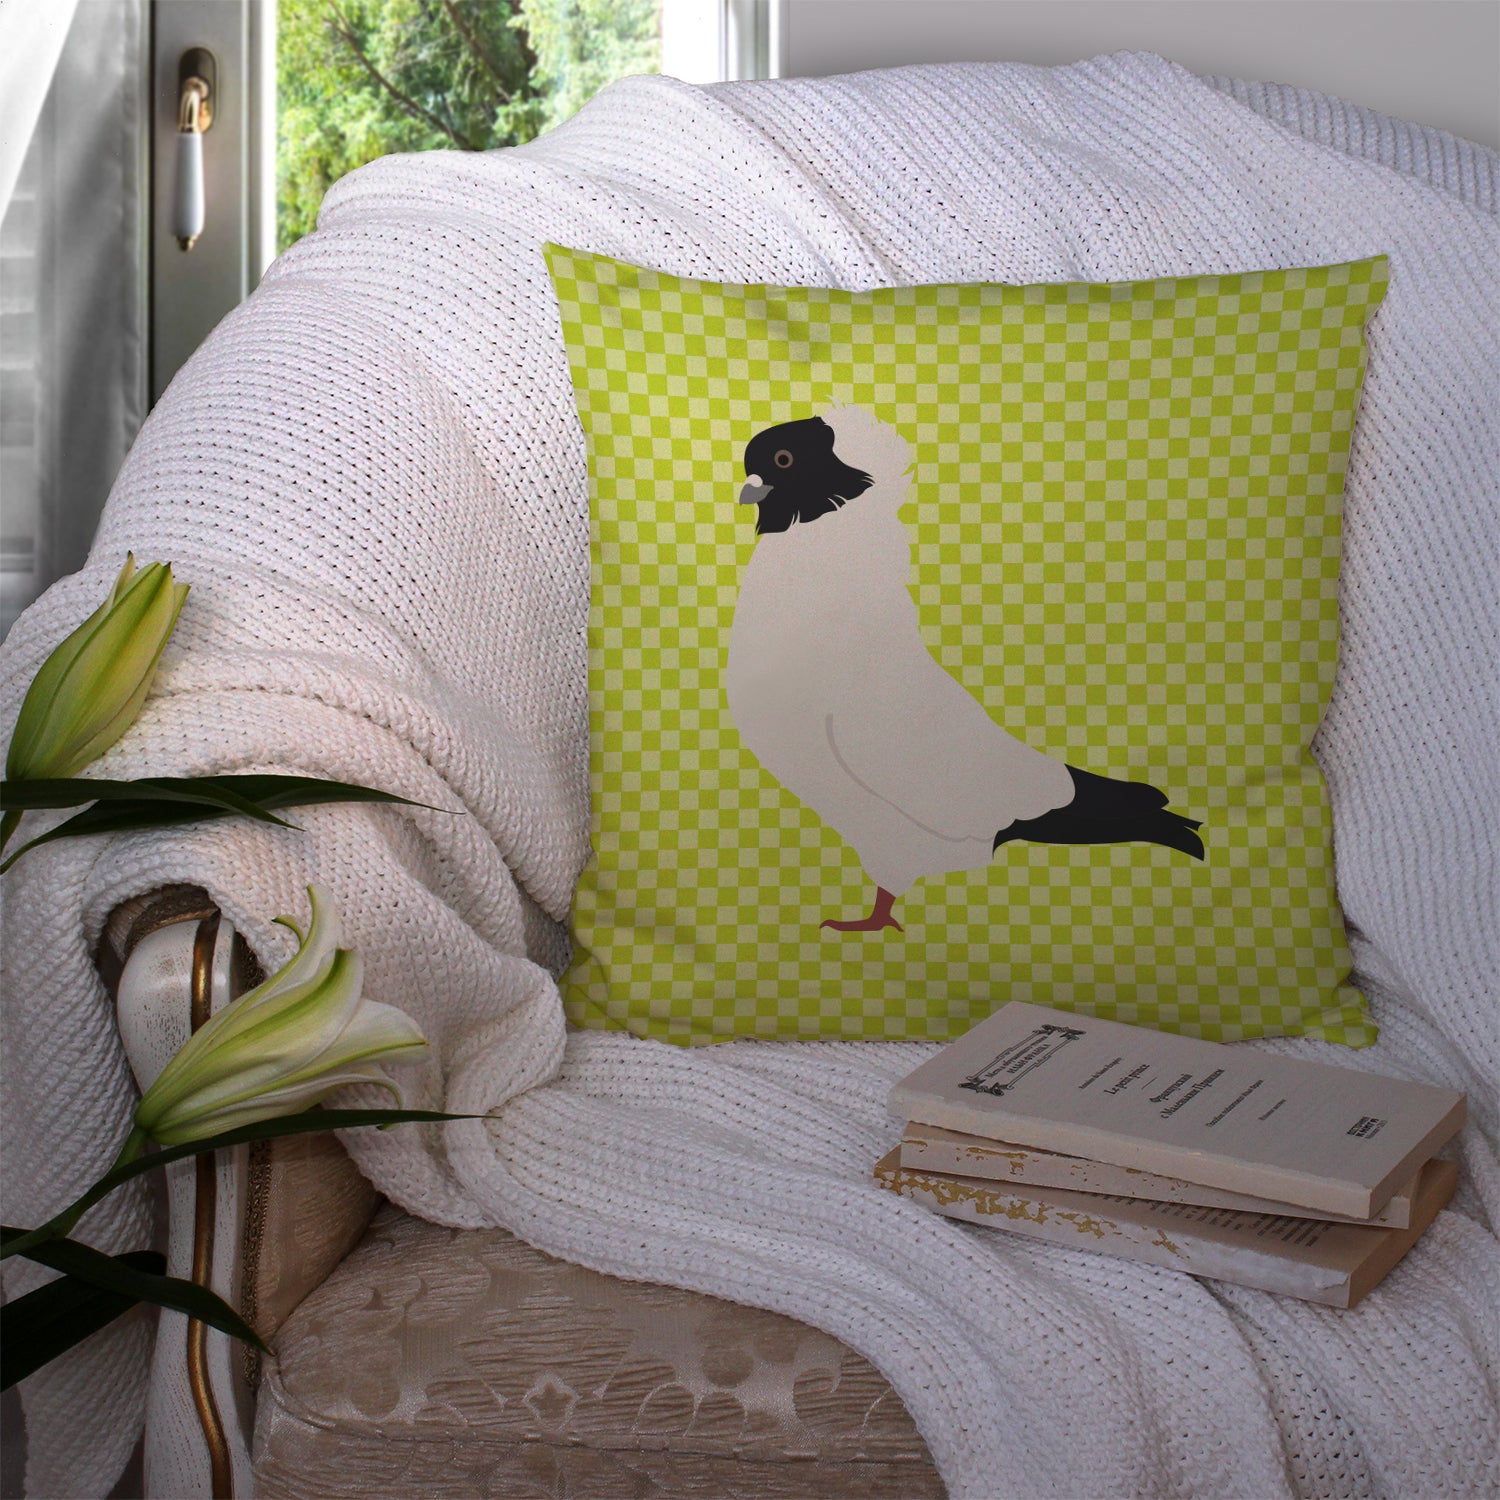 Nun Pigeon Green Fabric Decorative Pillow BB7778PW1414 - the-store.com